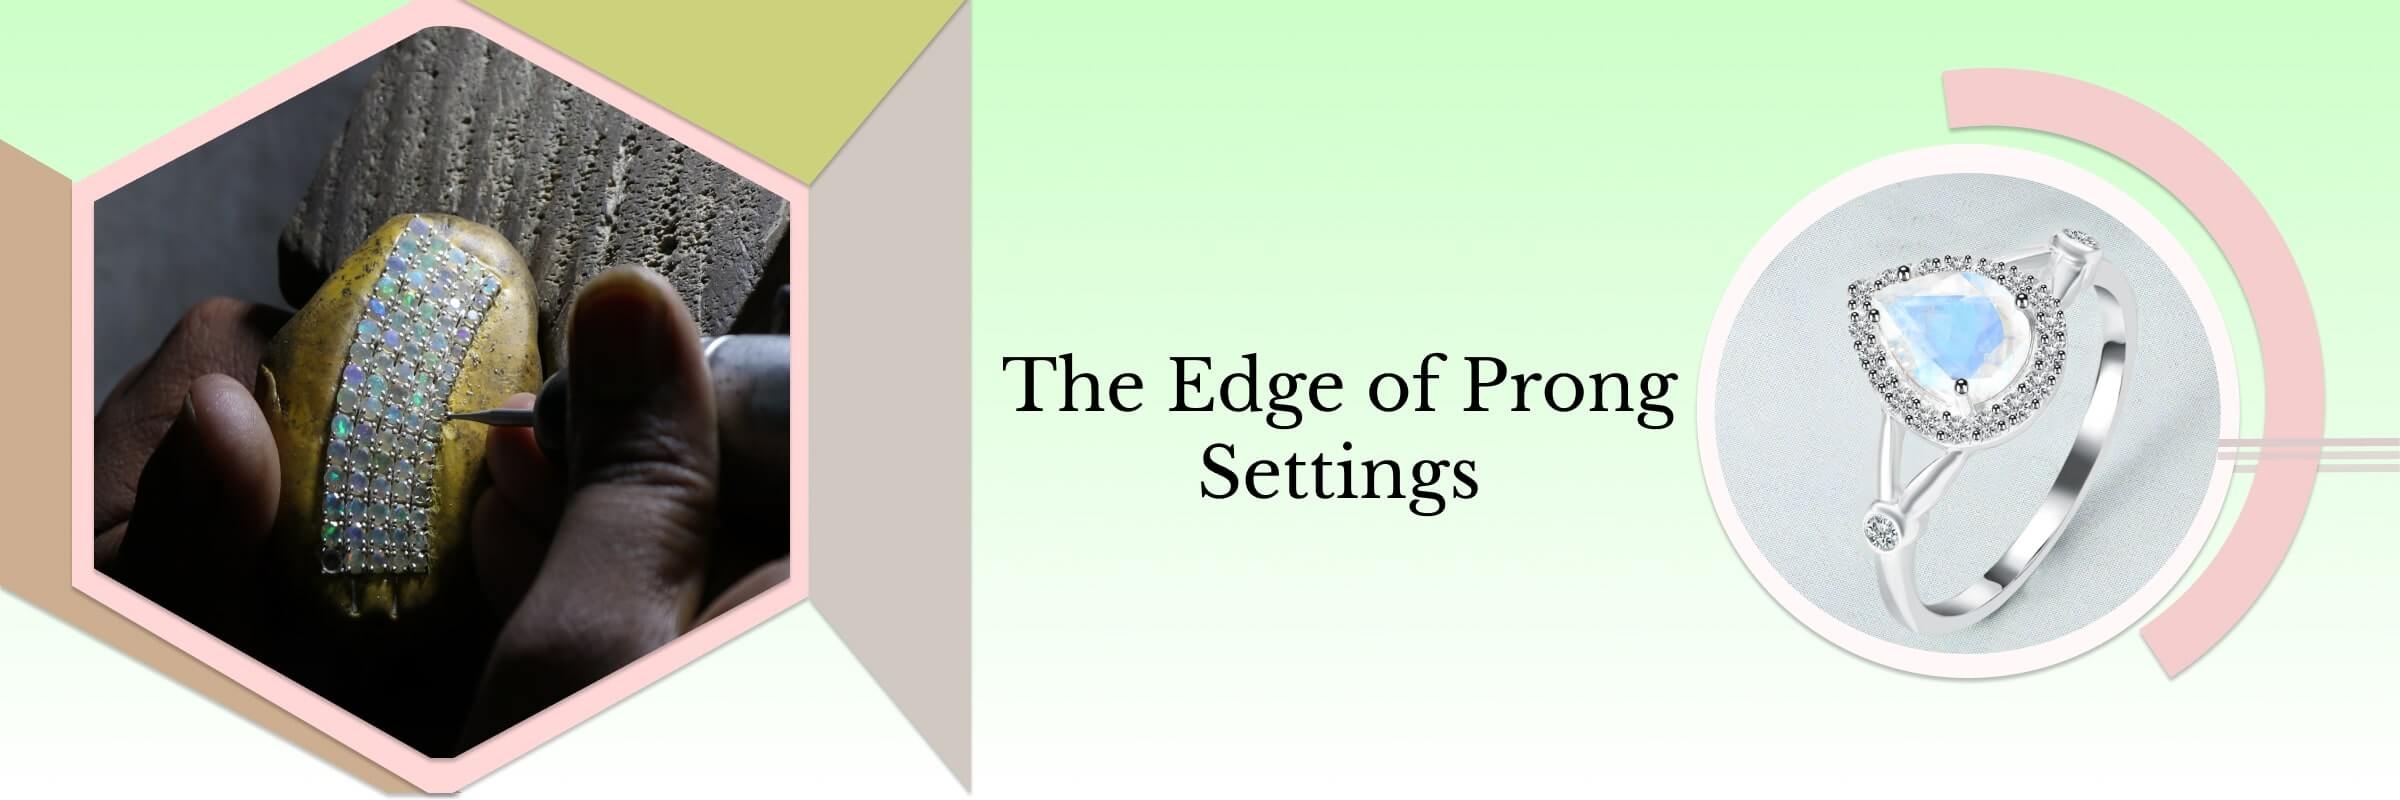 Advantages of Prong settings